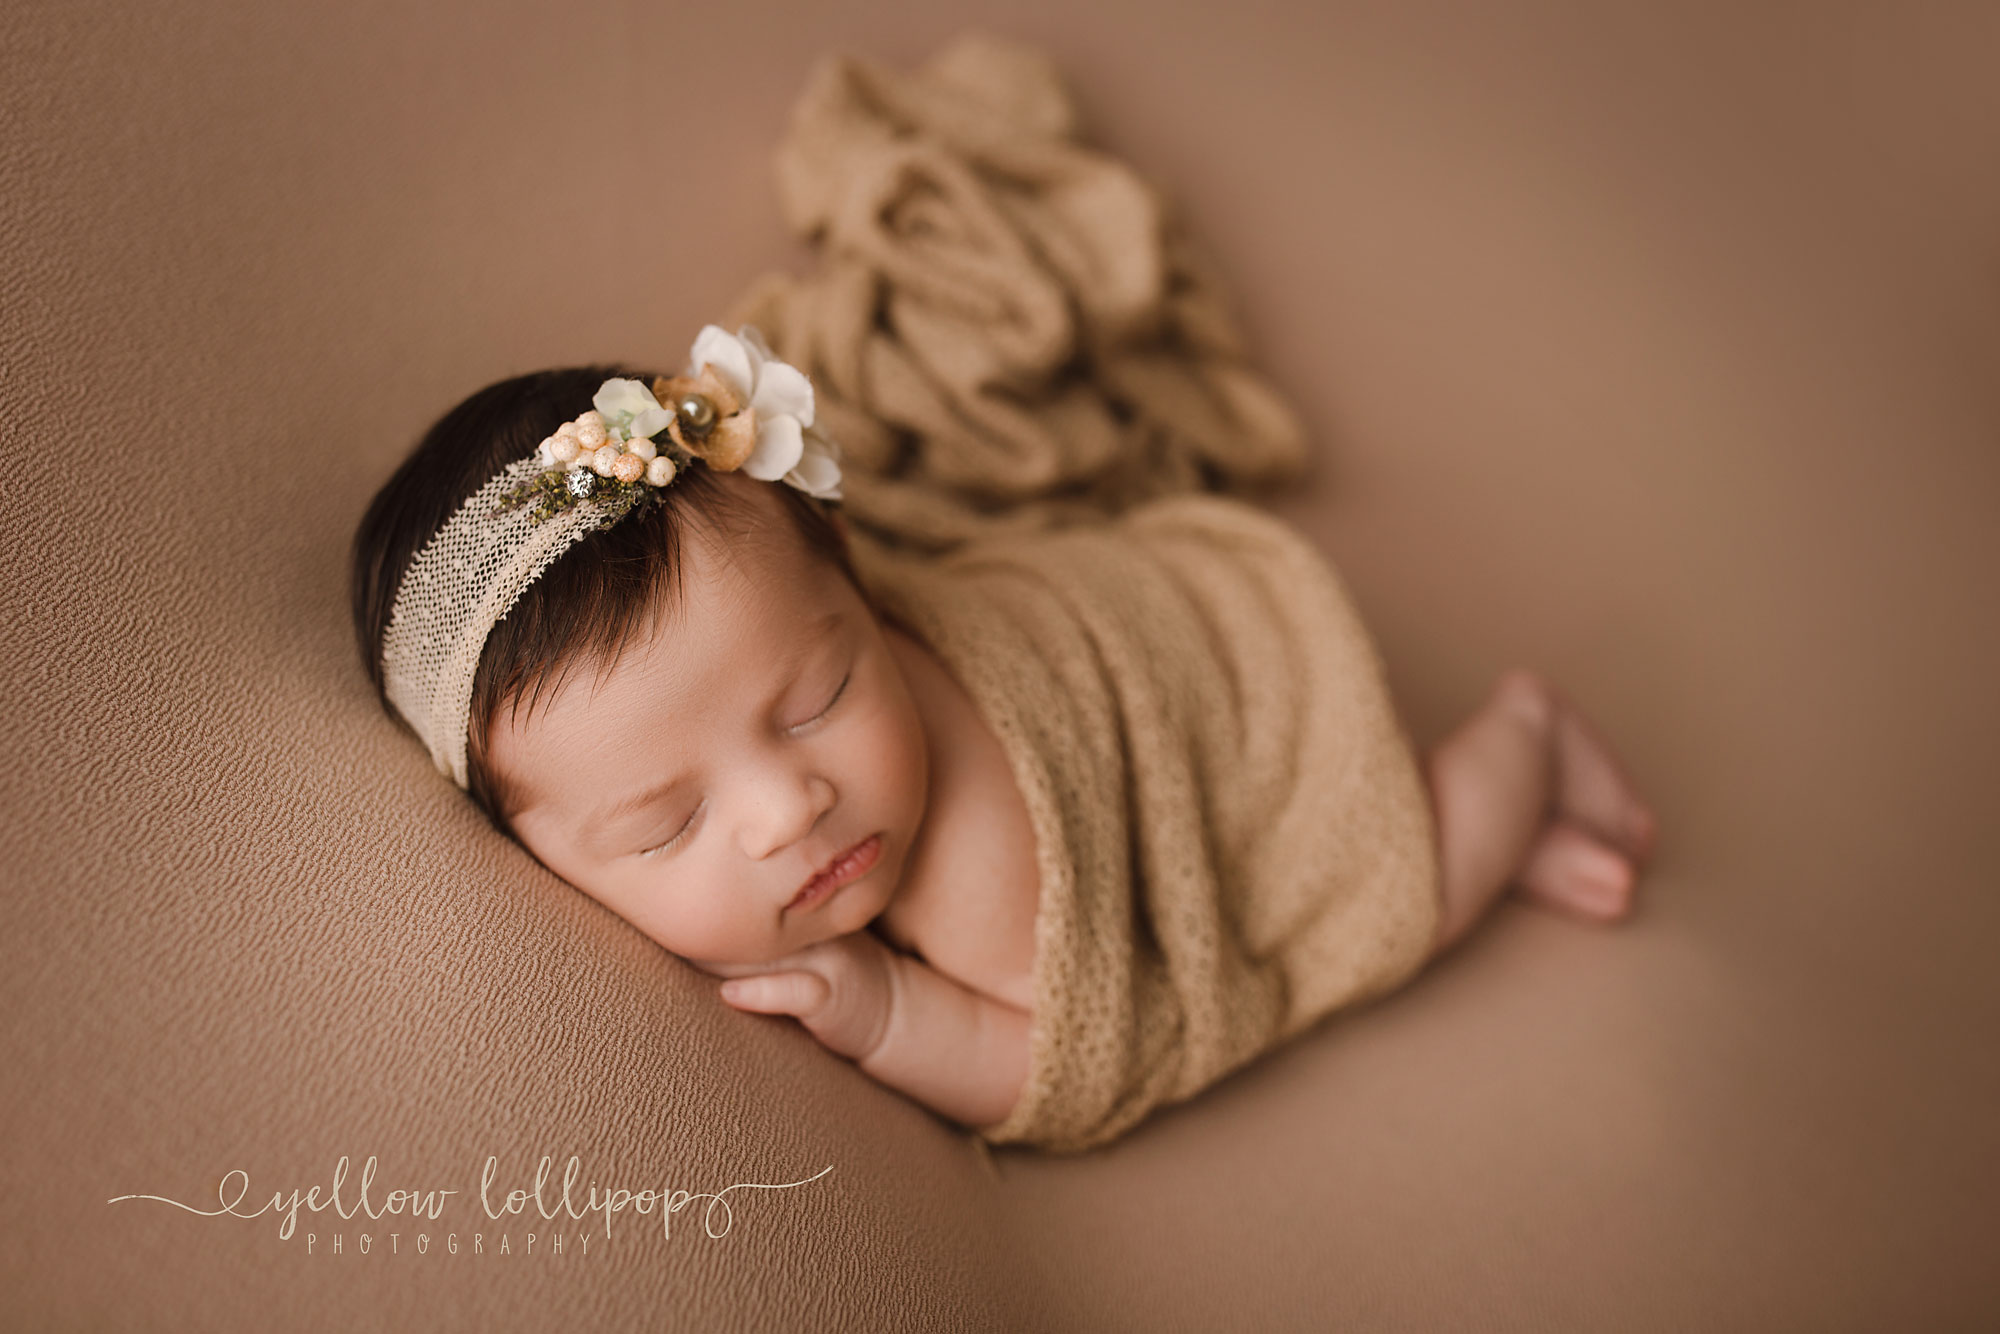 central nj newborn photography baby sleeping on a beige blanket